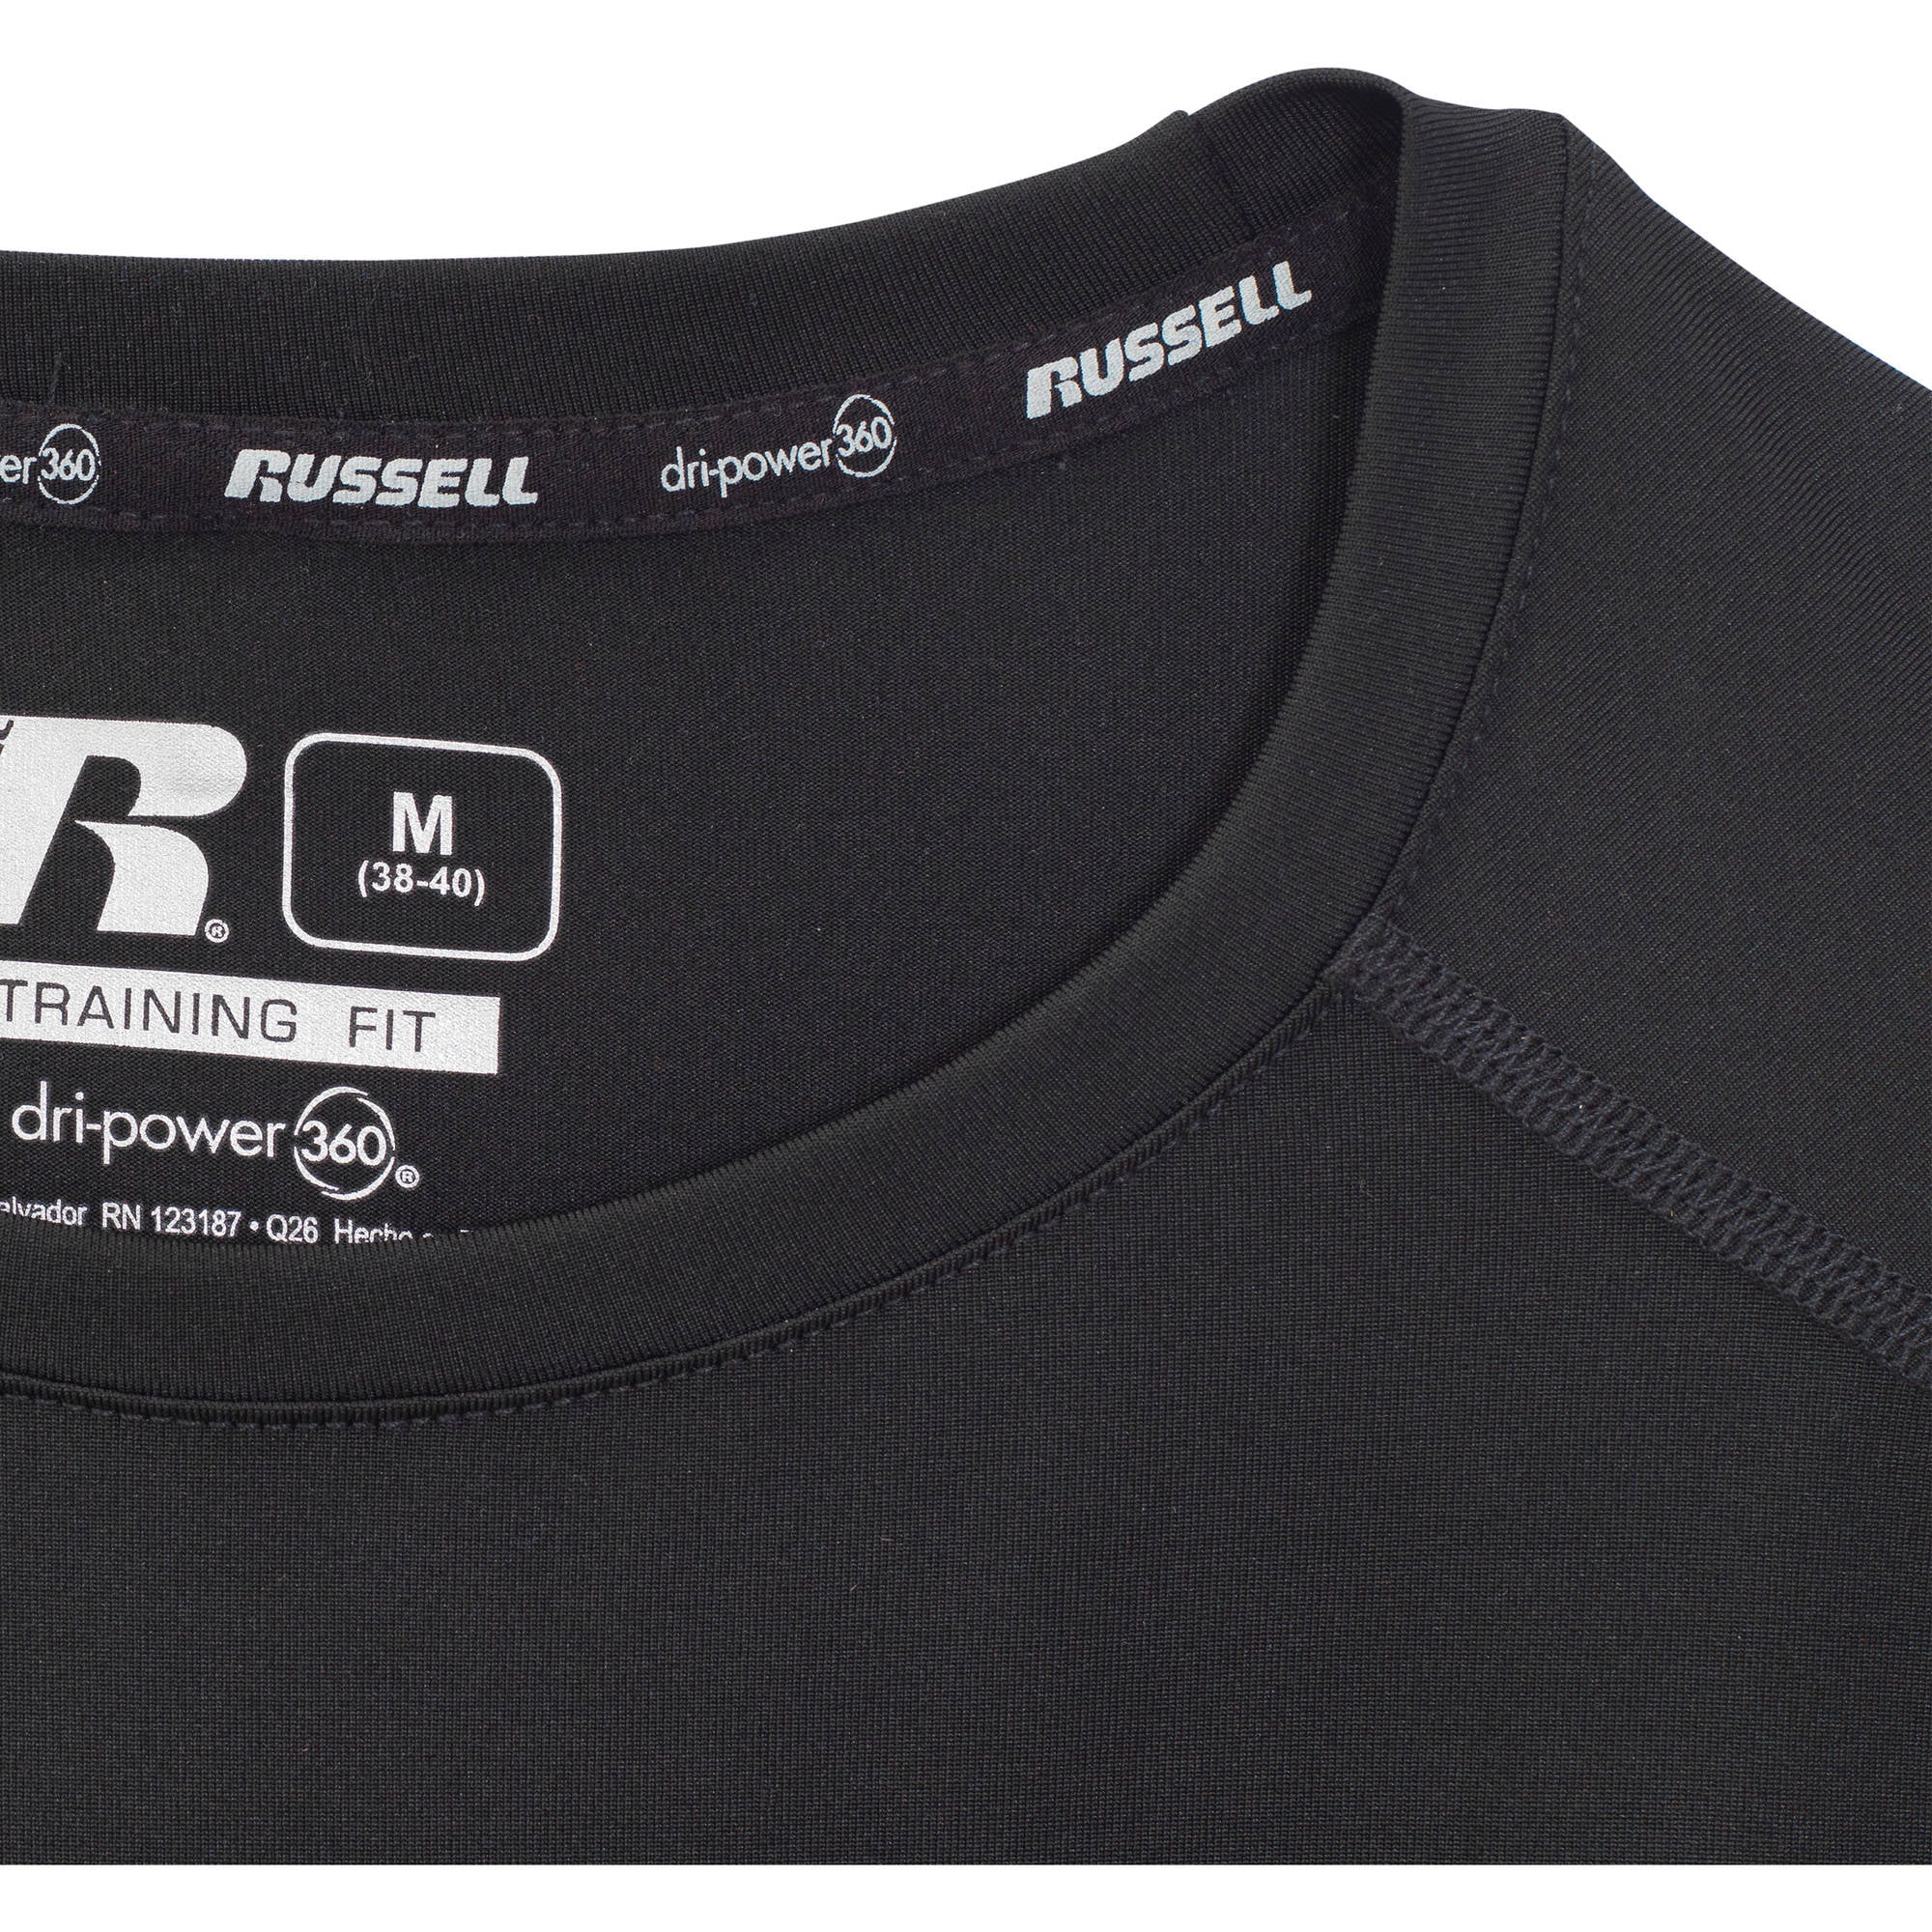 russell dri power 360 t shirts